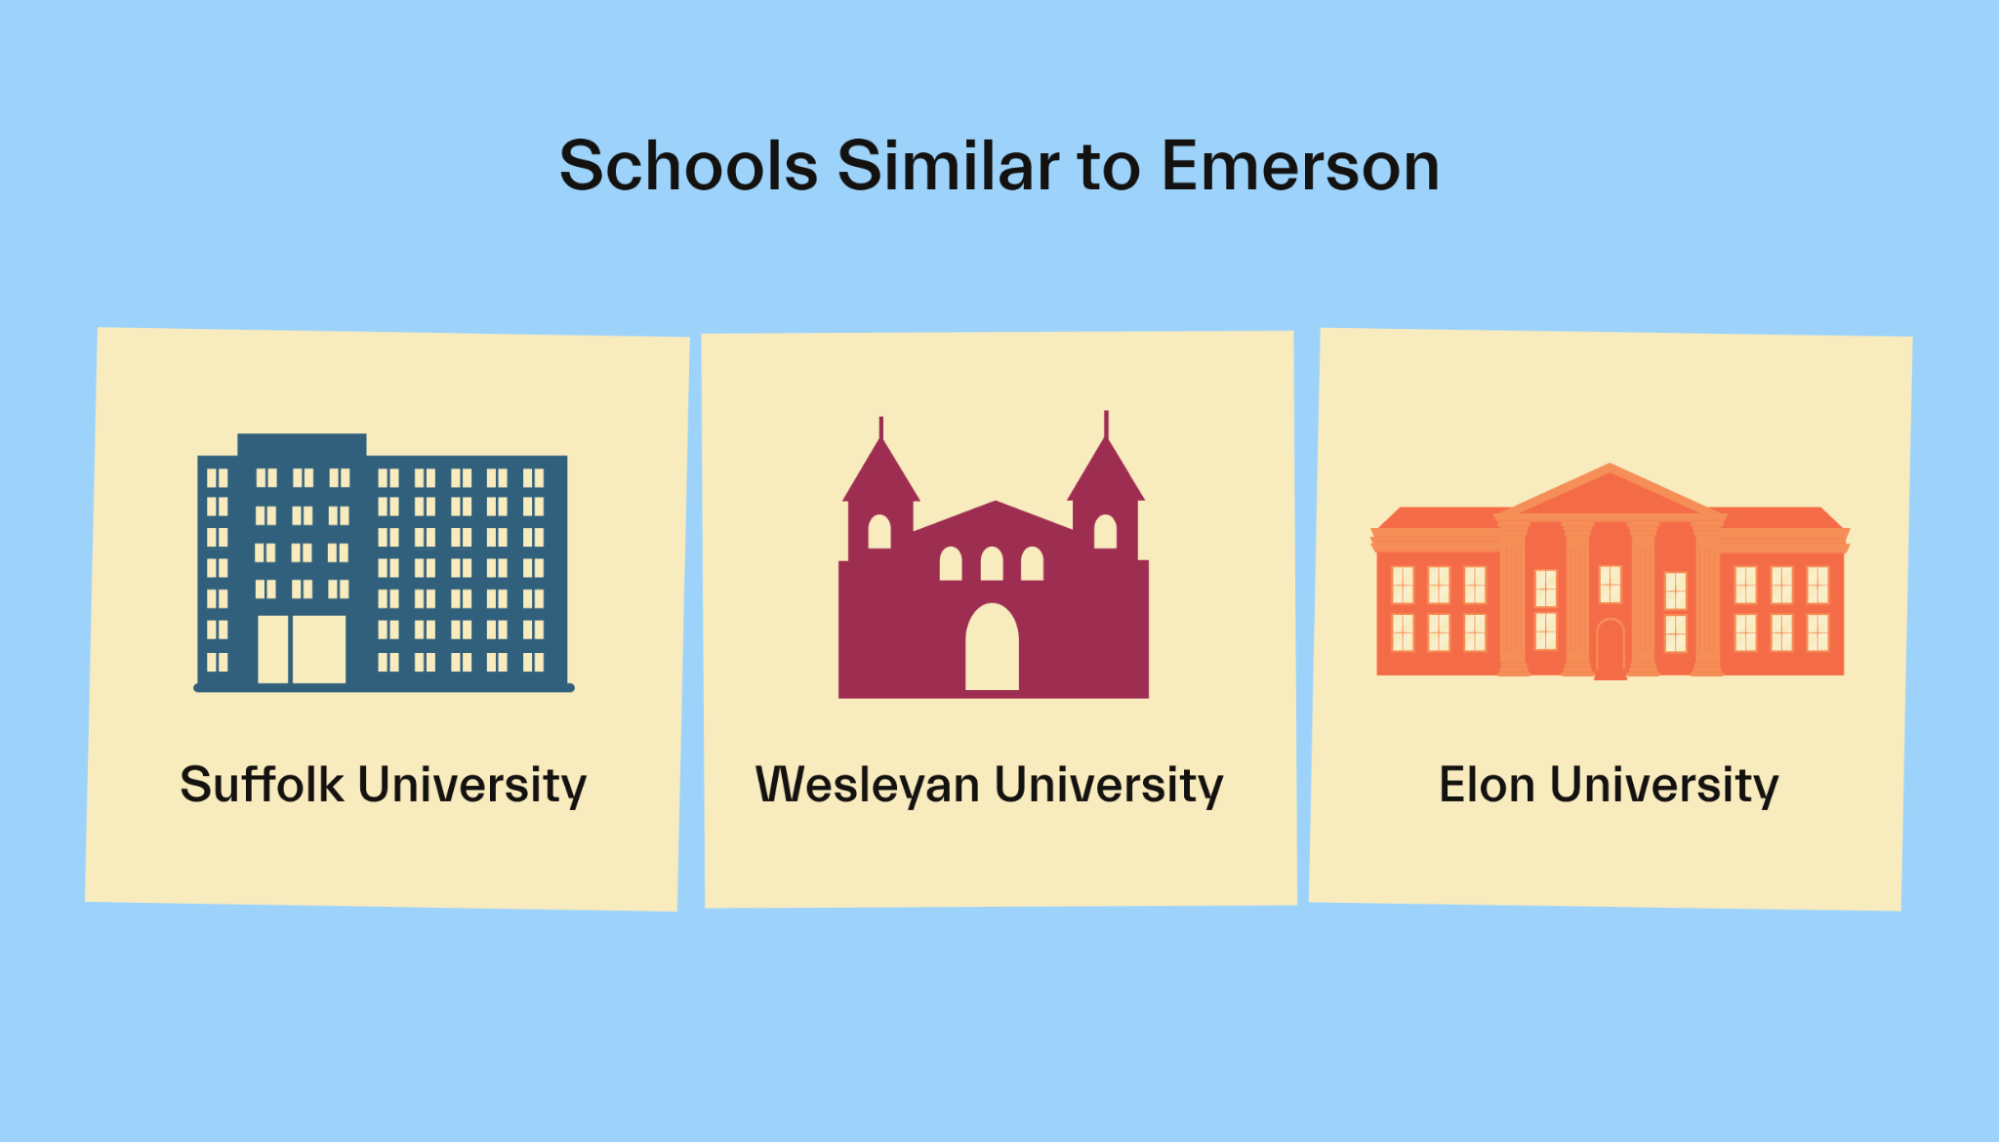 Schools similar to Emerson